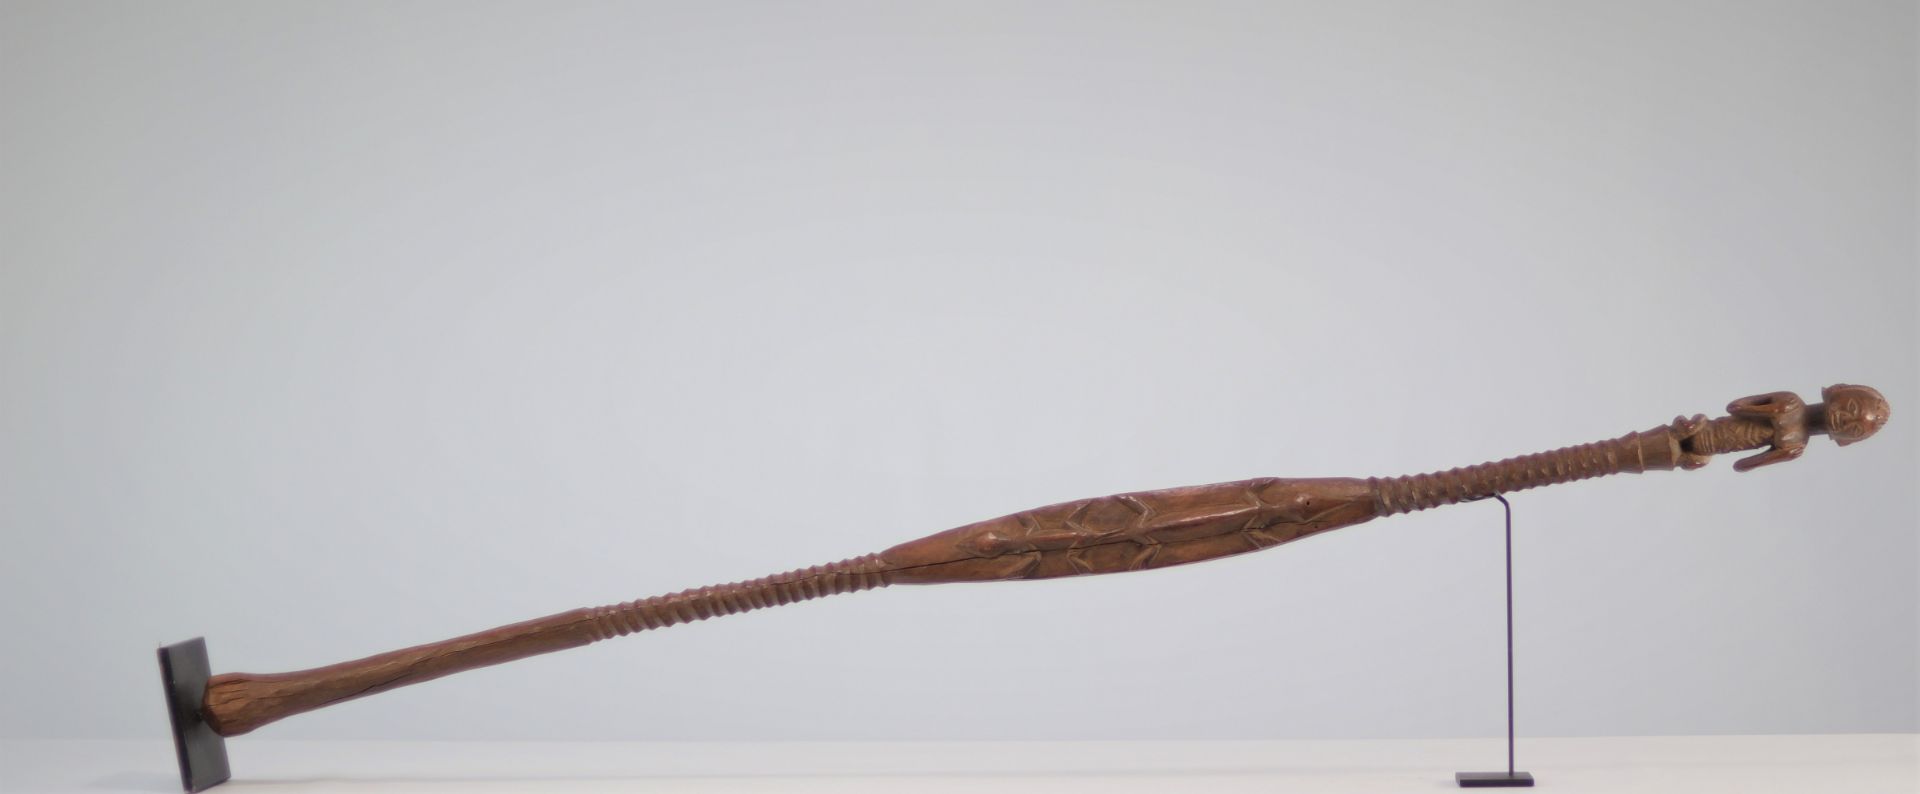 Luba Shankadi scepter surmounted by a figure - Image 2 of 6